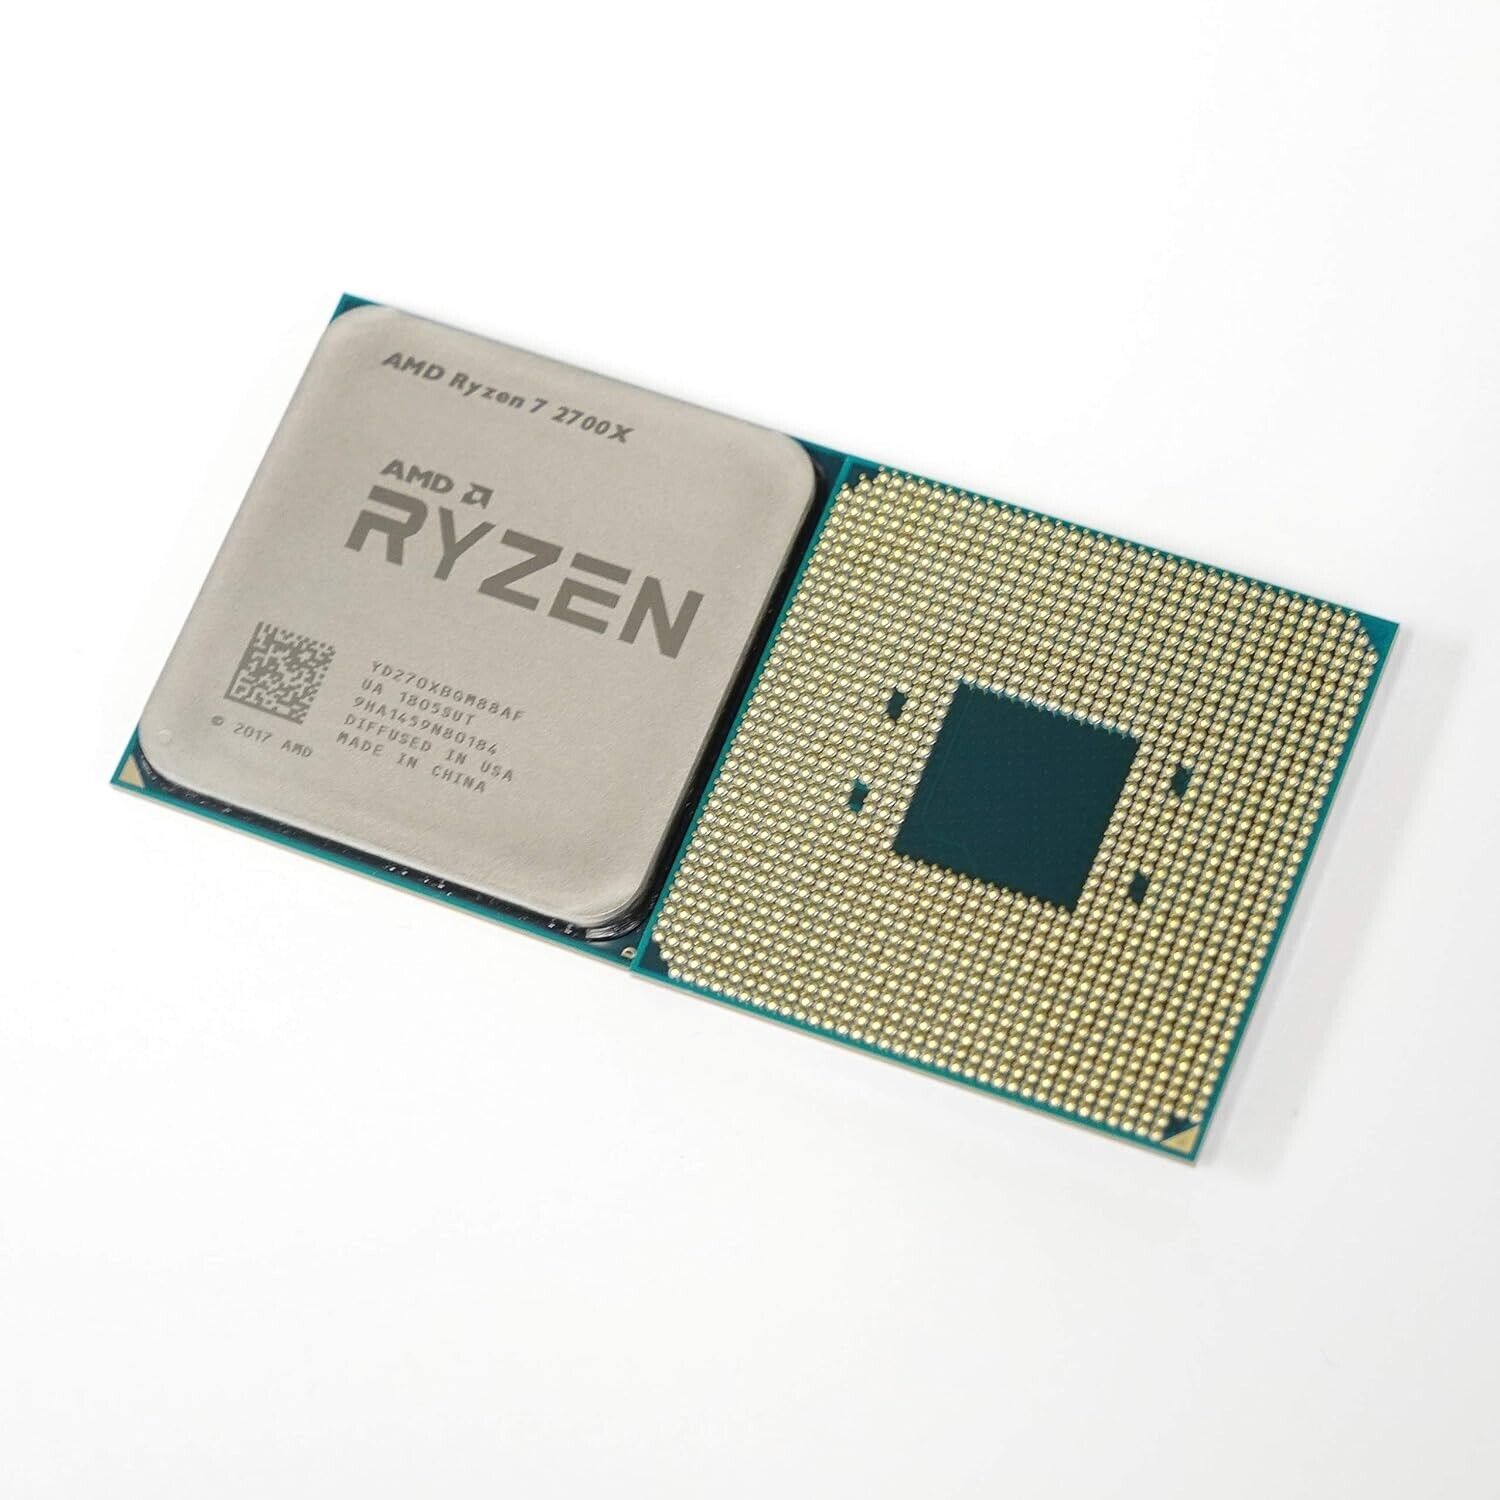 AMD Ryzen 7 2700X 3.7 GHz 8-Core CPU YD270XBGM88AF AM4 Processor